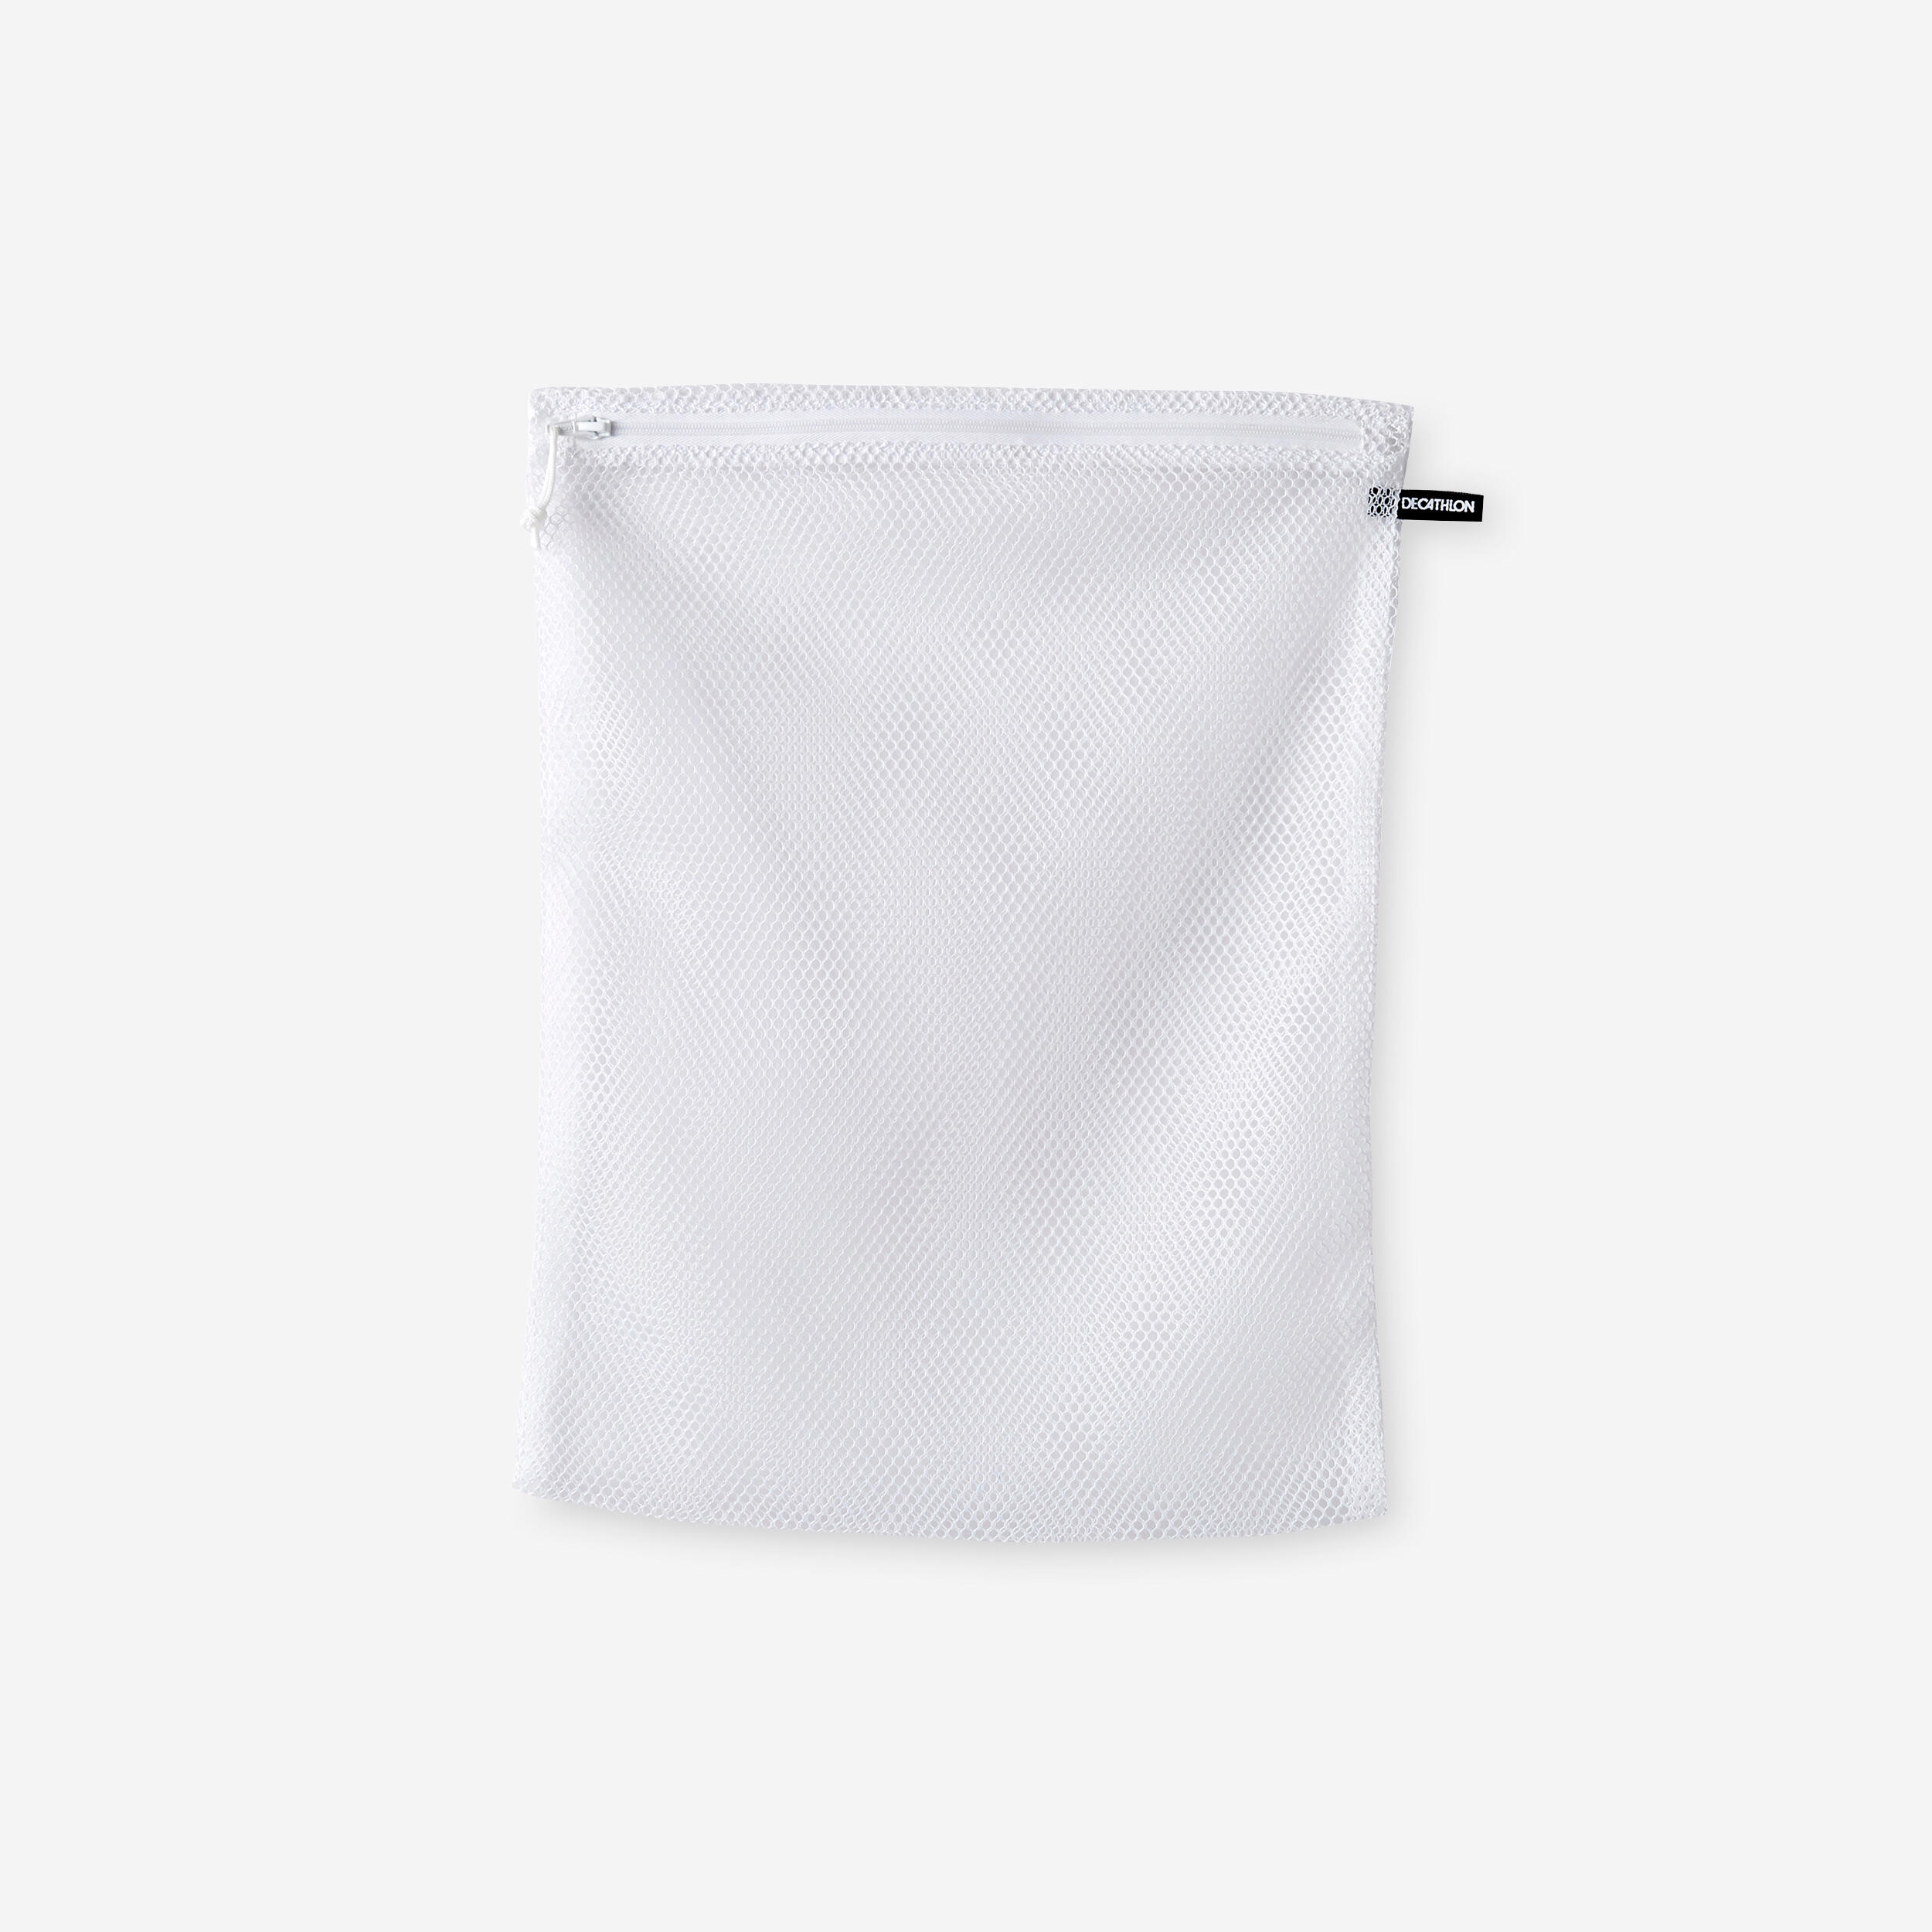 Zipped Laundry Bag 30 x 40cm 1/7